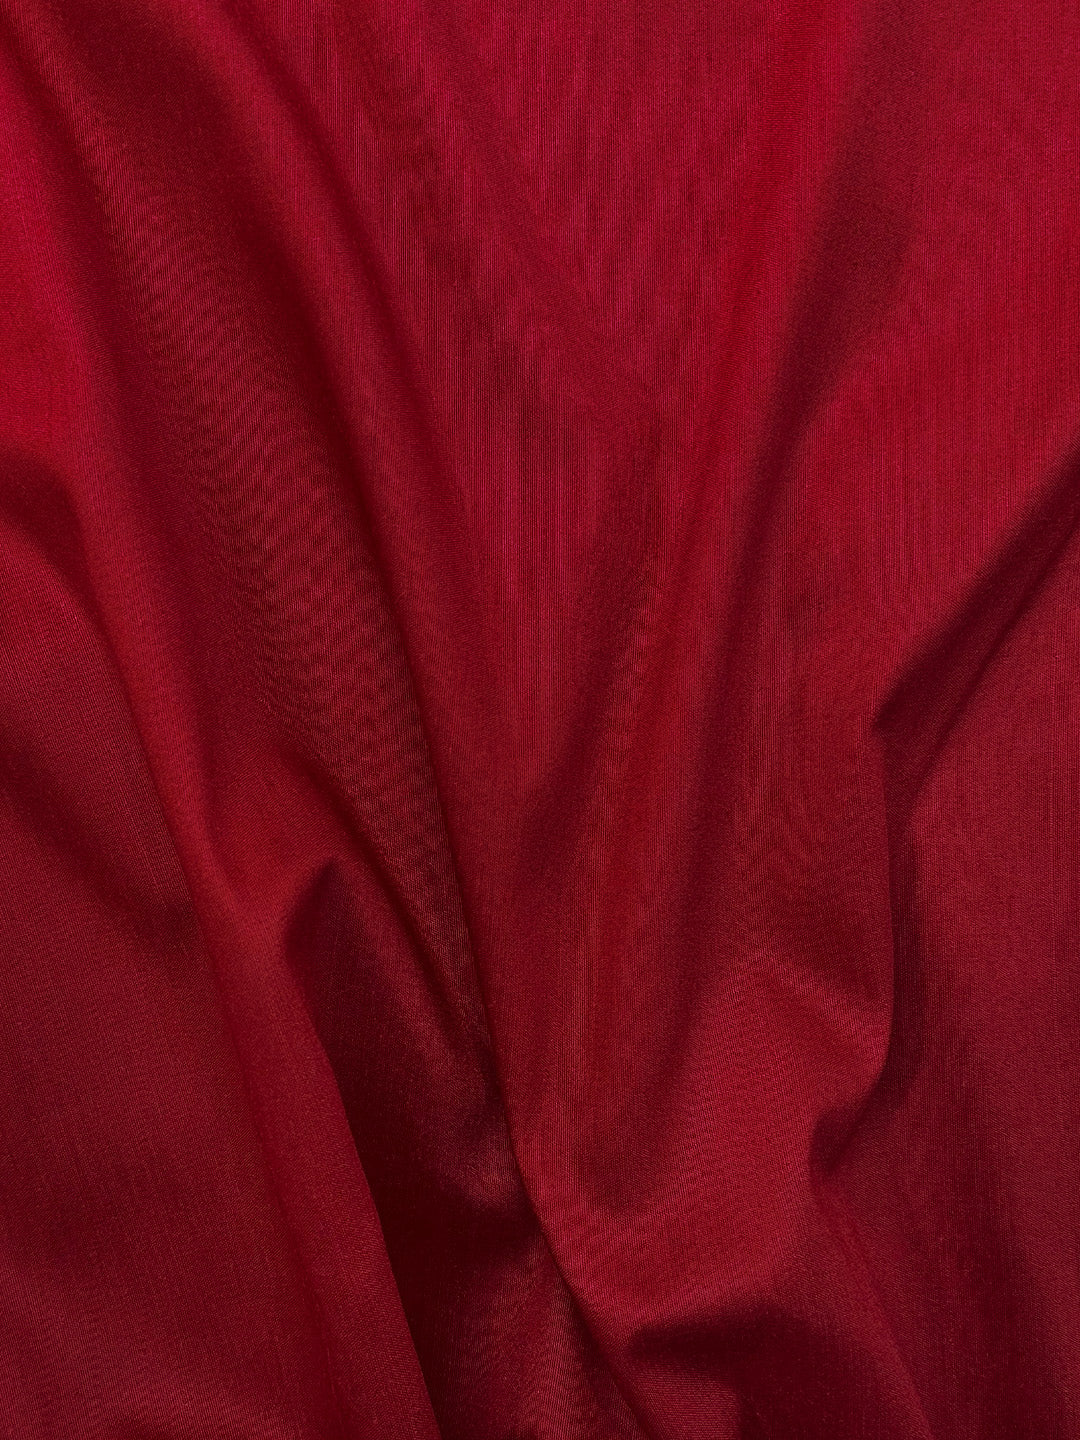 Banarasi collared kurta with zari placket and afghani pants- scarlet red